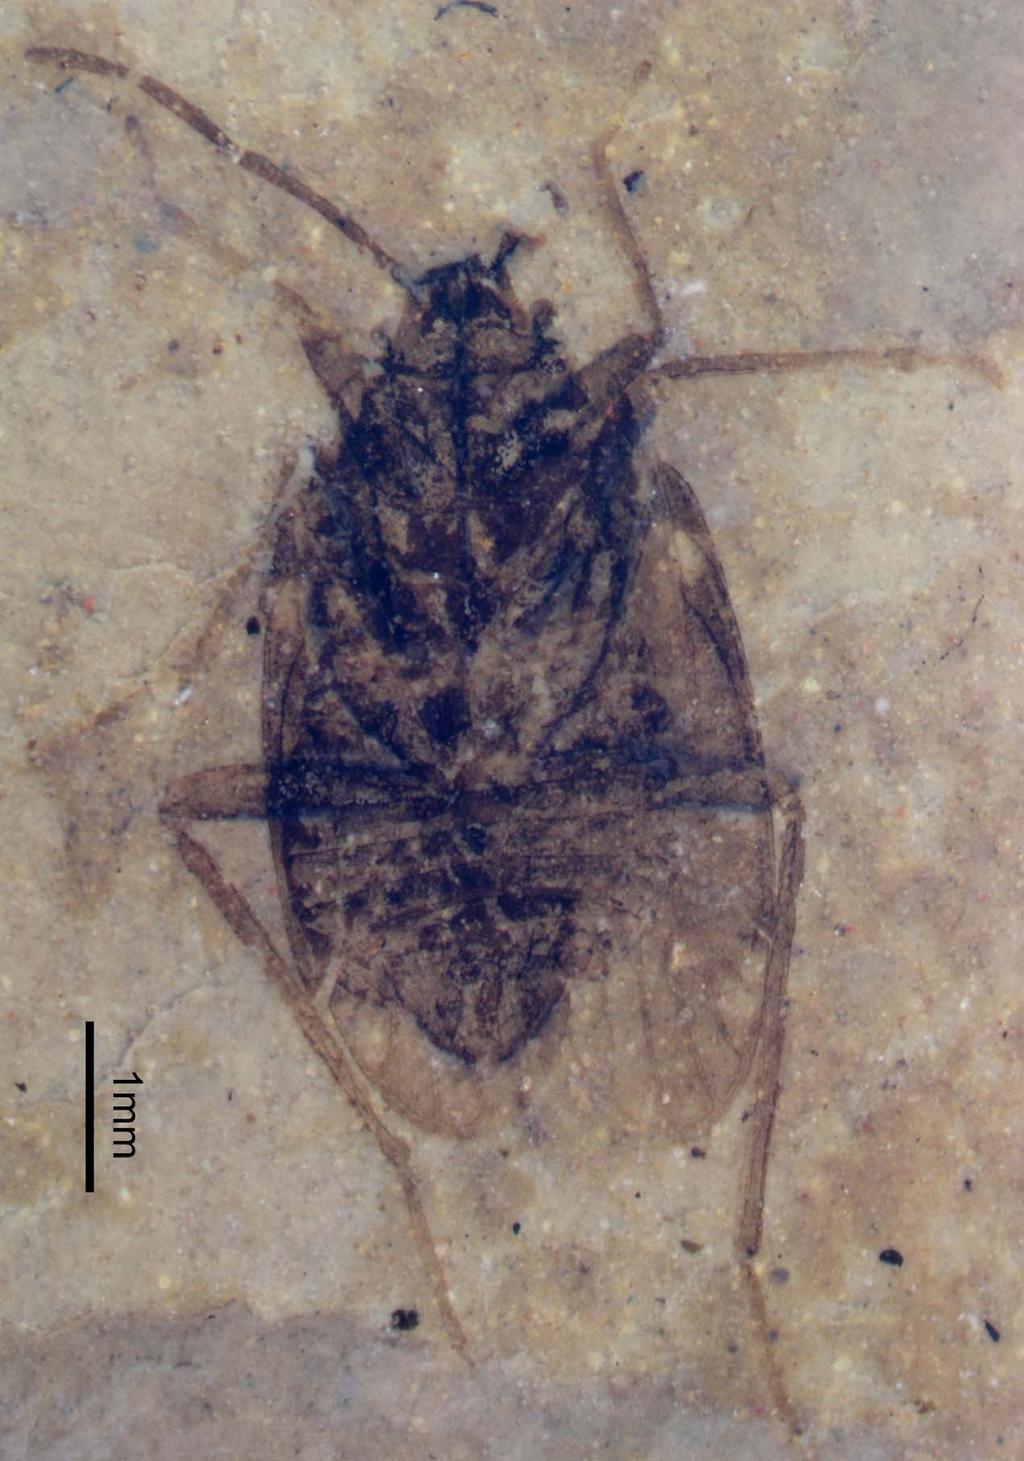 PLATE 1. Photograph of Venustsalda locella gen. et sp. nov.